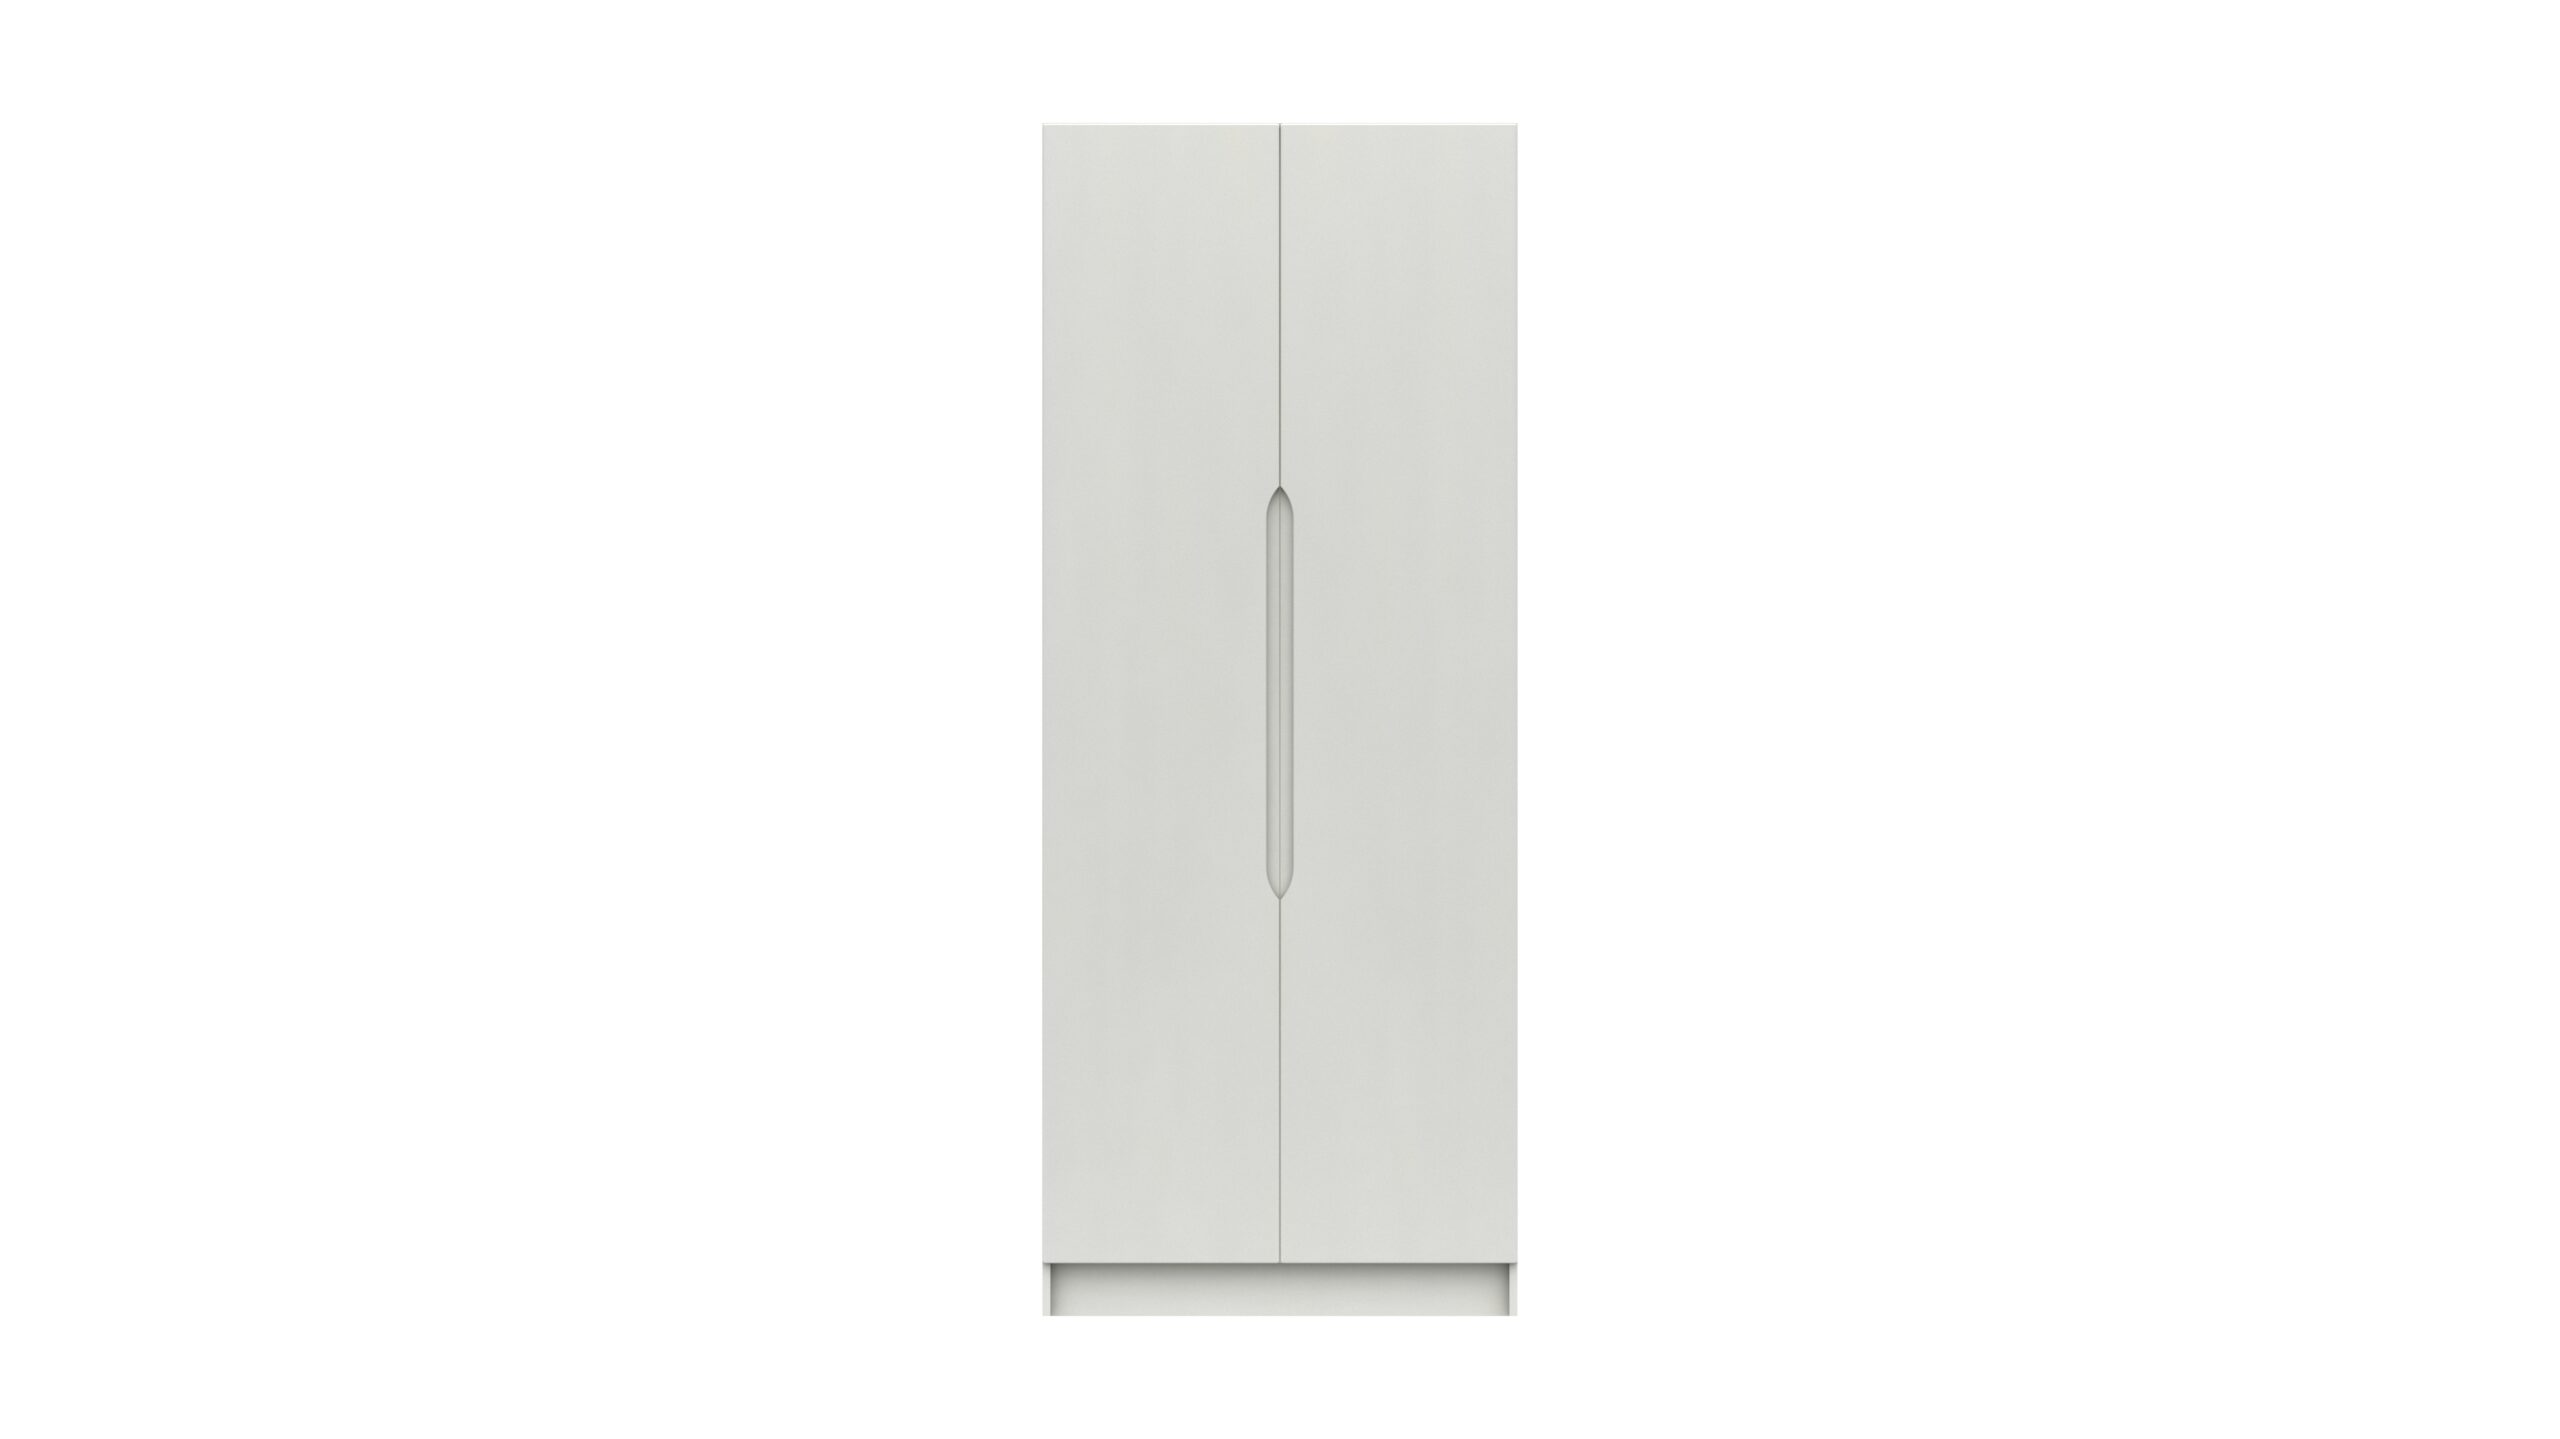 Sinata Tall Two Door Gloss Wardrobe - White Gloss